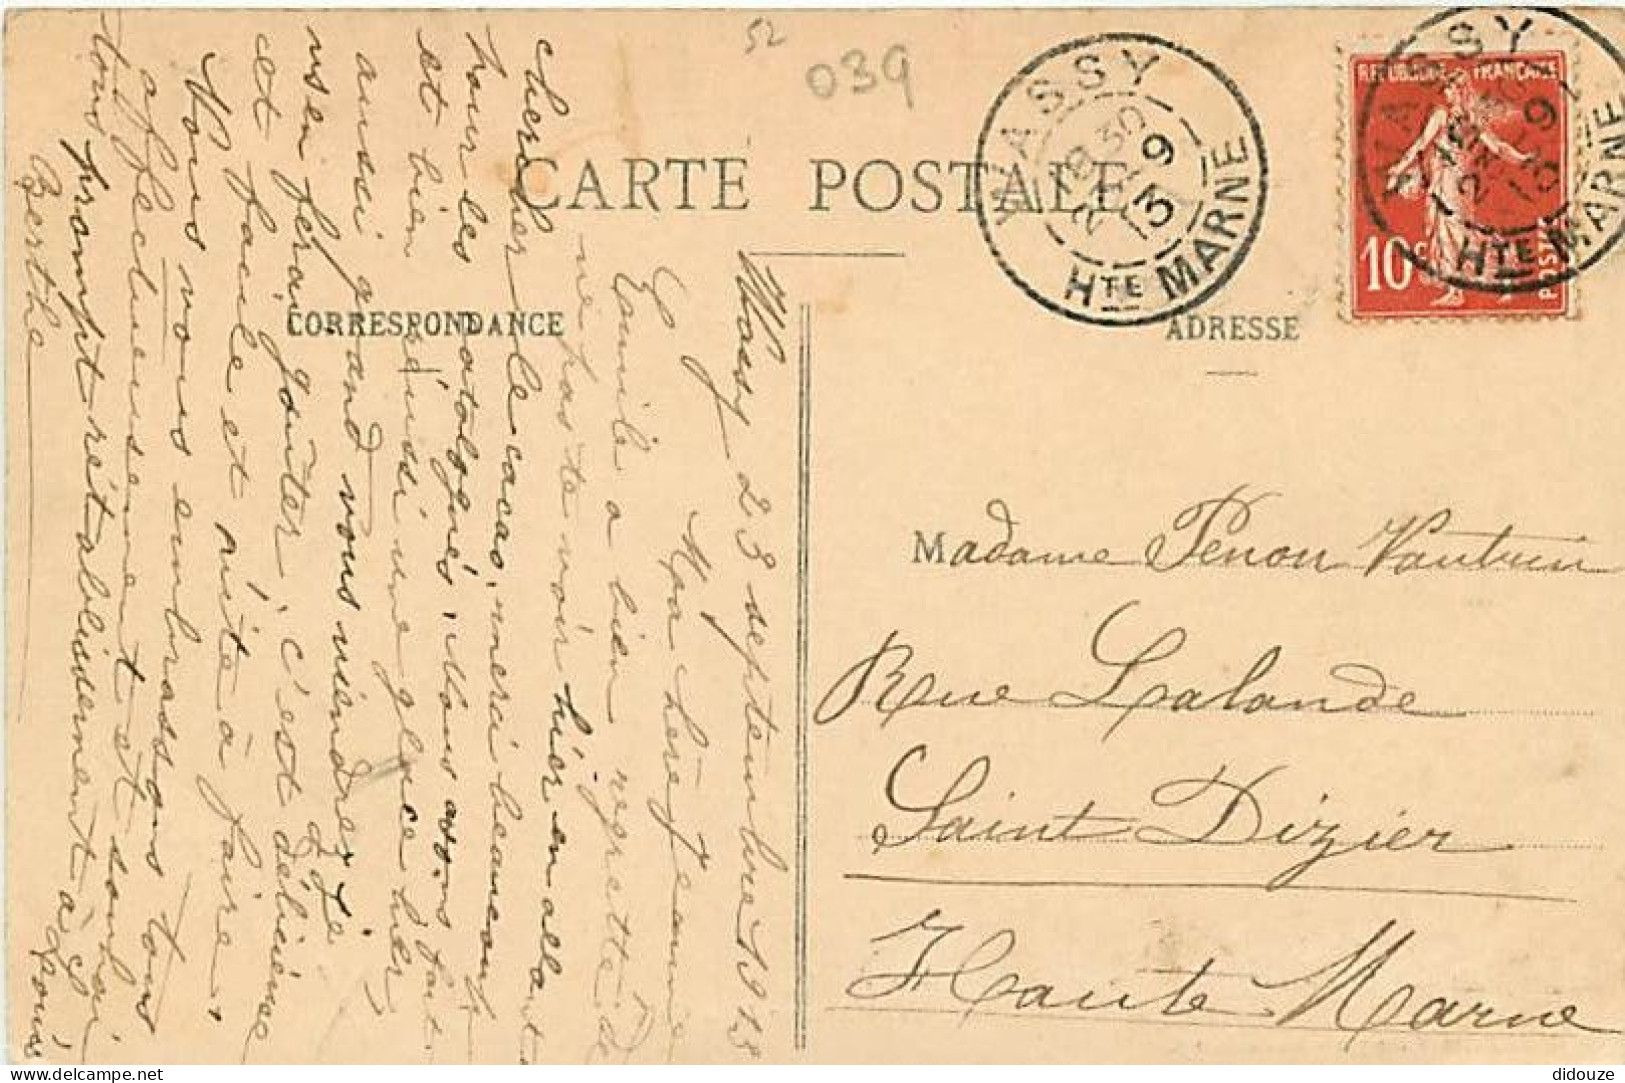 52 - Wassy - Avenue De La Gare - Animée - Correspondance - Oblitération Ronde De 1913 - CPA - Voir Scans Recto-Verso - Wassy